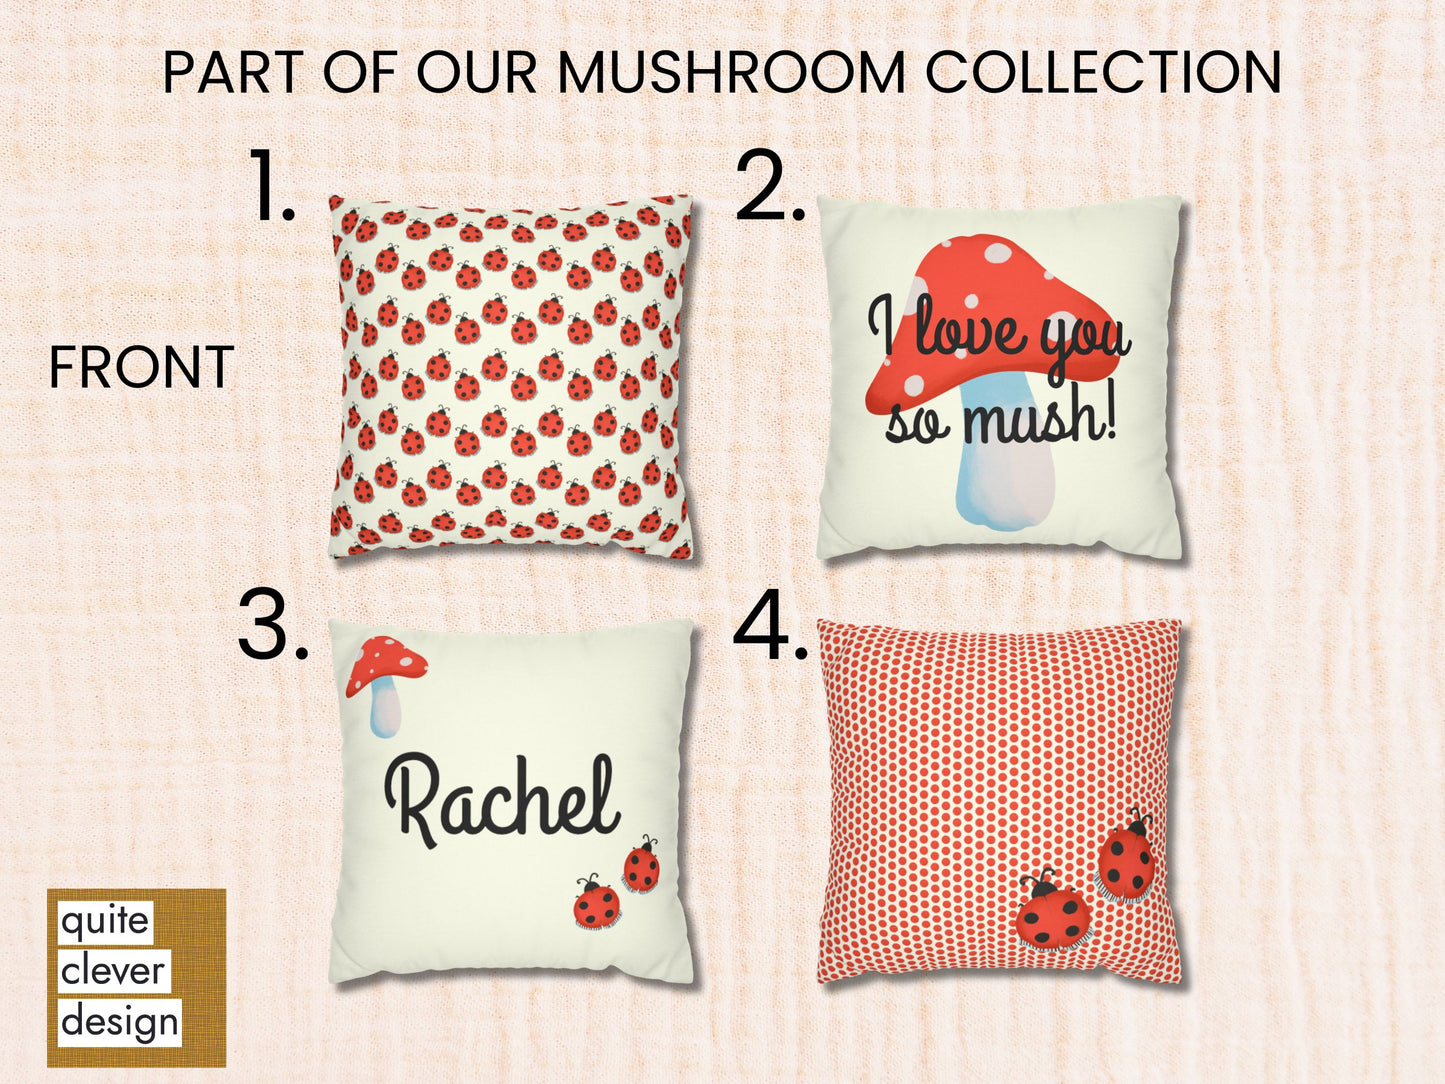 Ladybug Spun Polyester Square Pillowcase, Mushroom Collection Throw Pillow